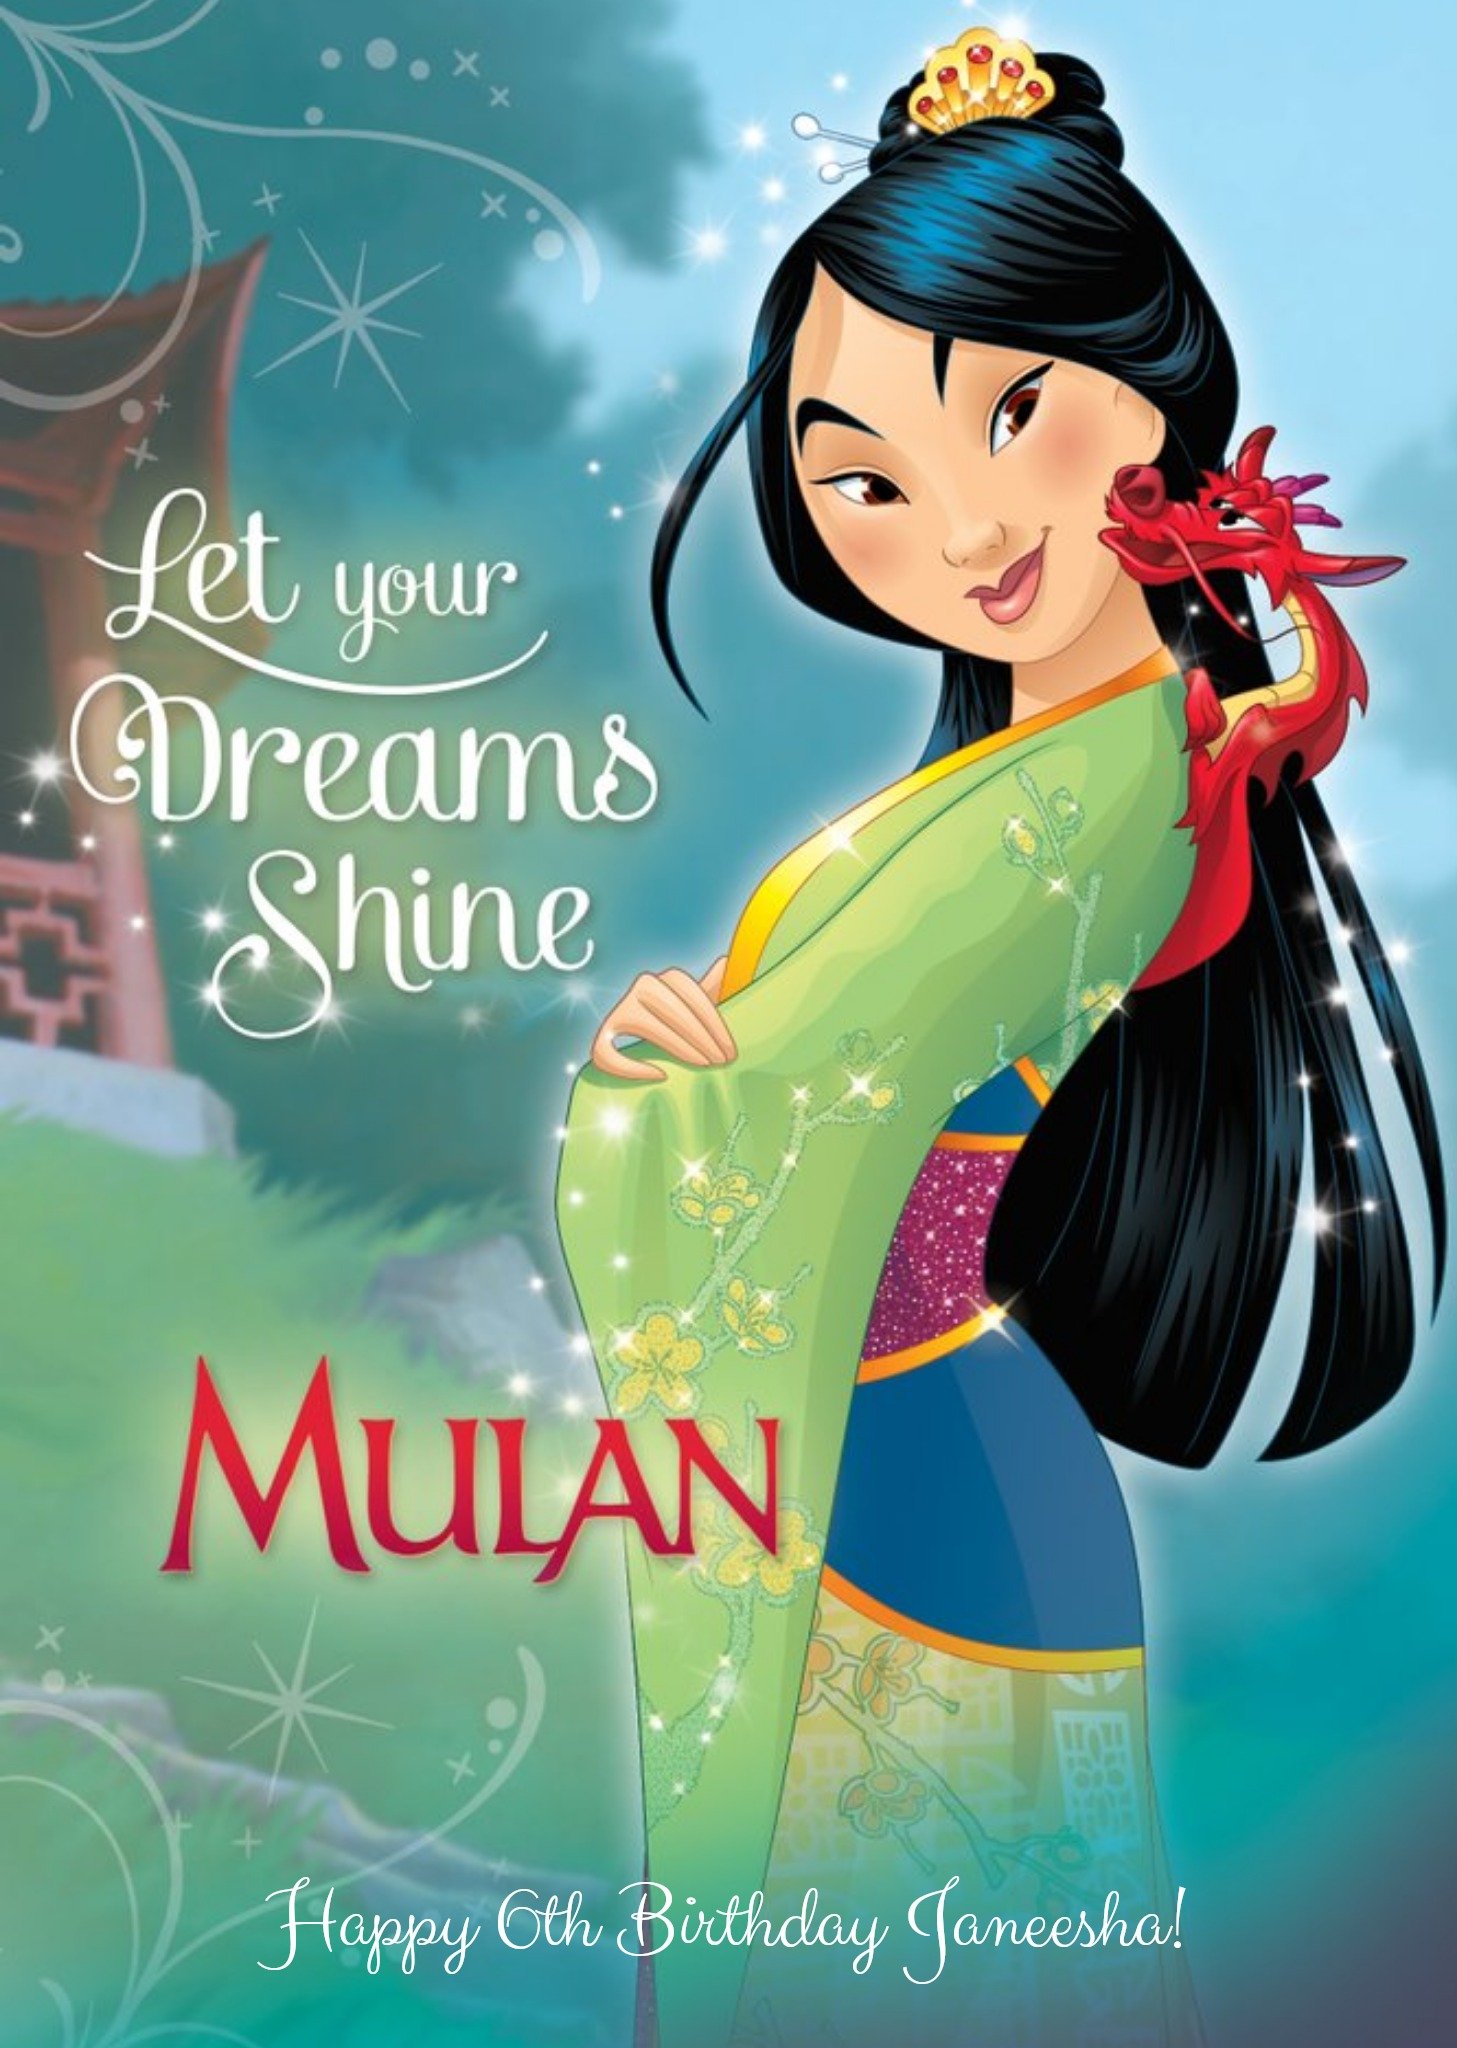 Disney Mulan Let Your Dreams Shine Happy 6th Birthday Card, Large